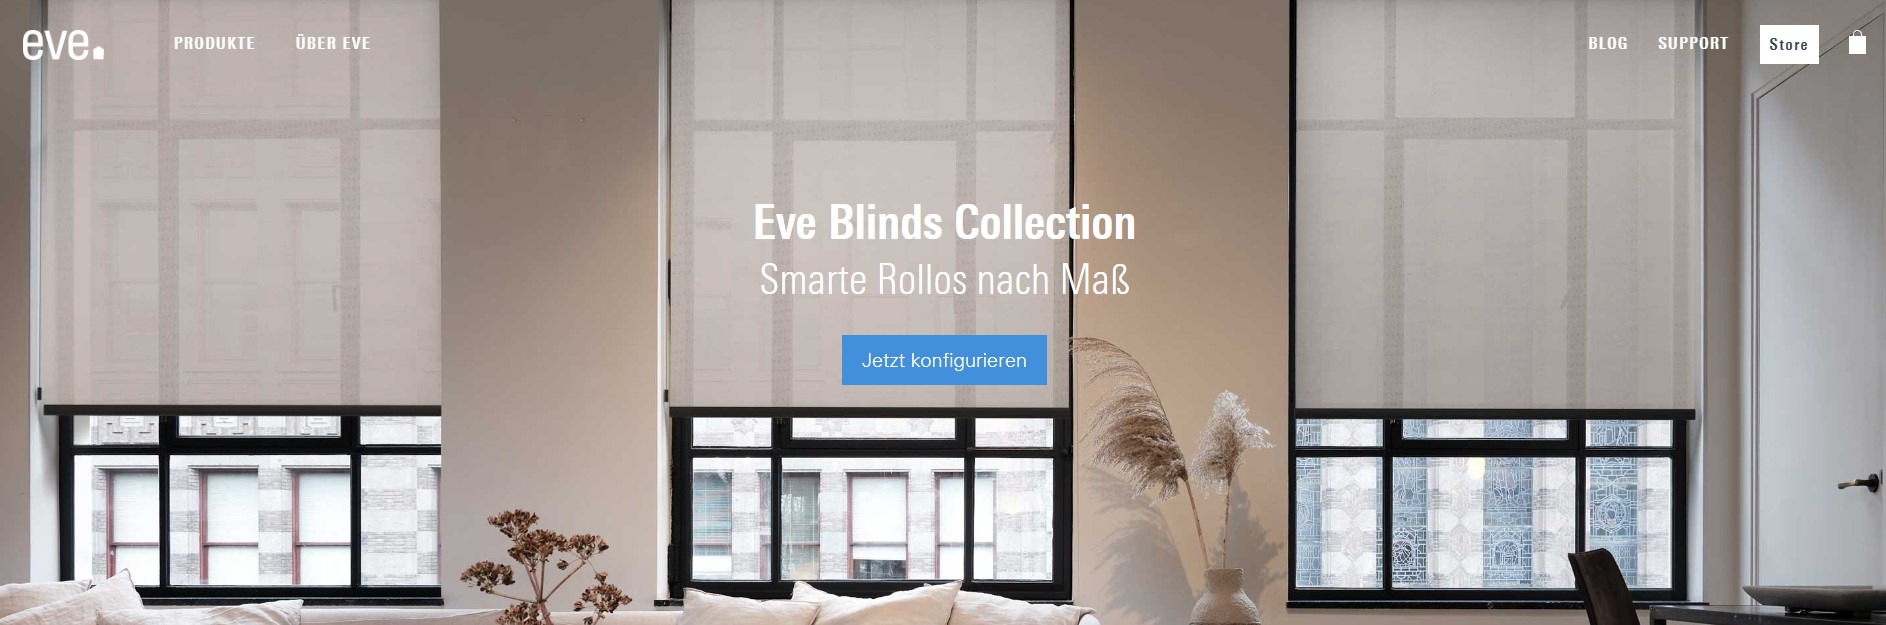 Nowe inteligentne rolety Blinds Collection (źródło: Eve)